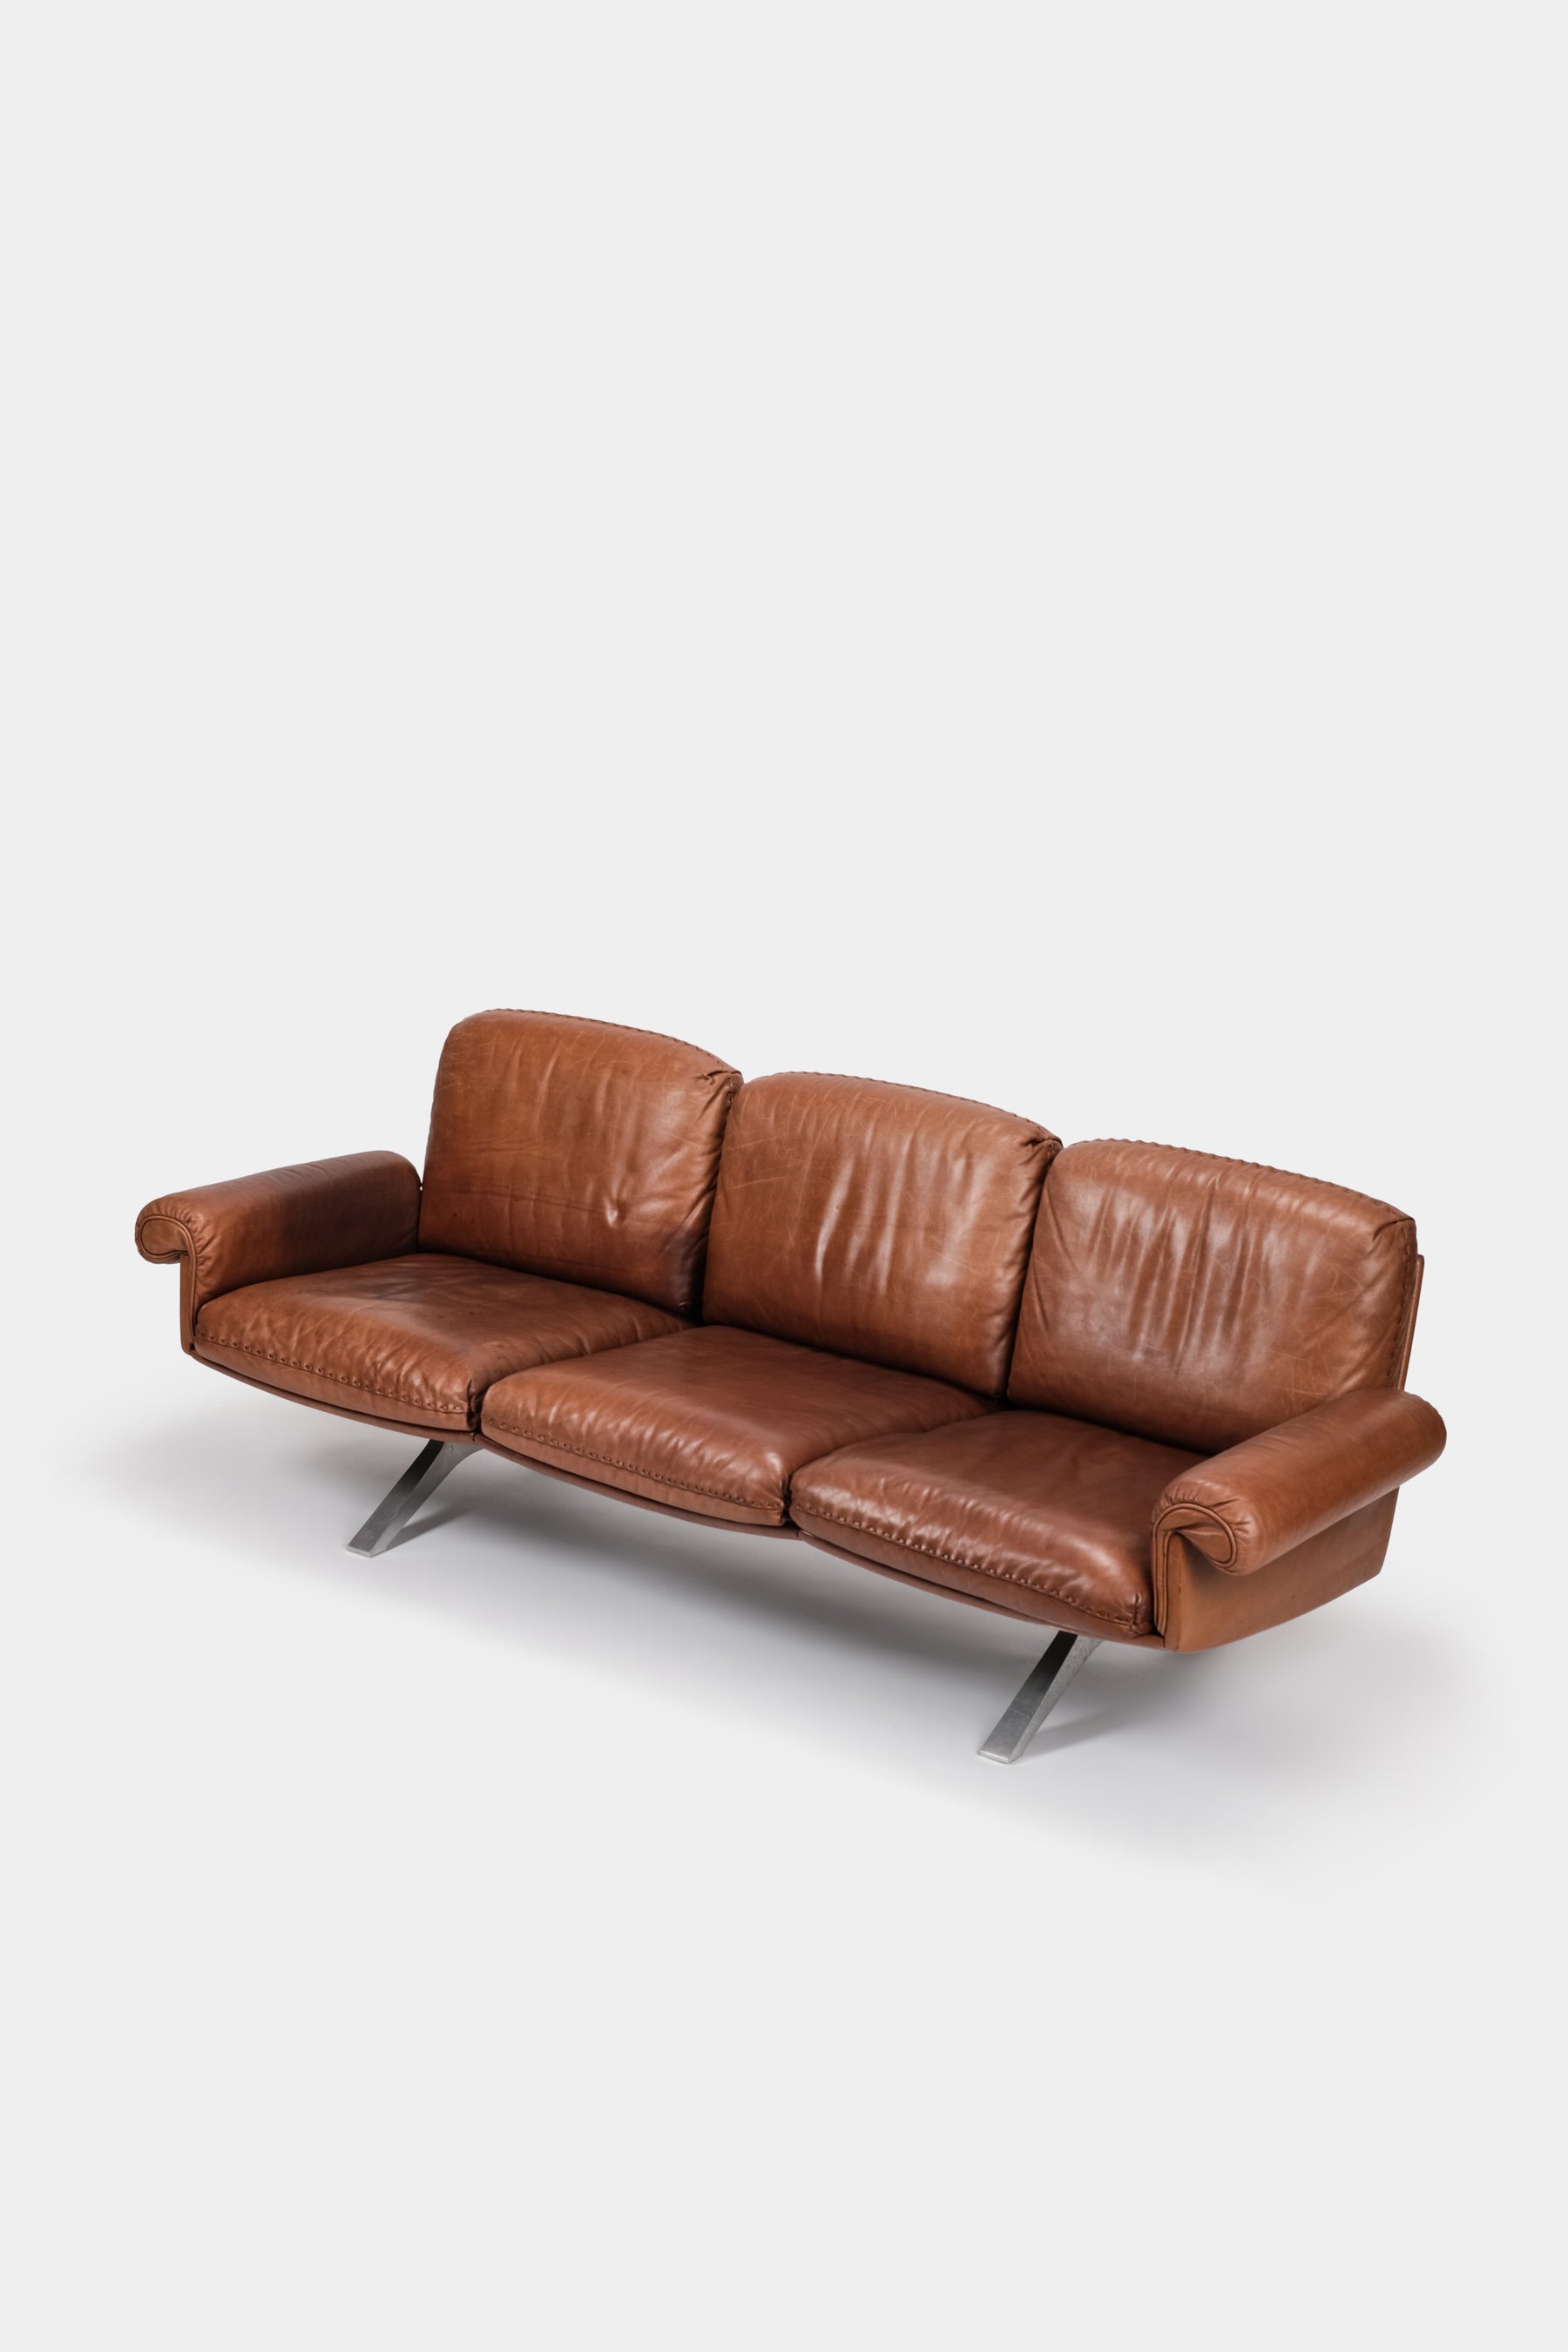 Sofa Model SD -31, De Sede, 60s